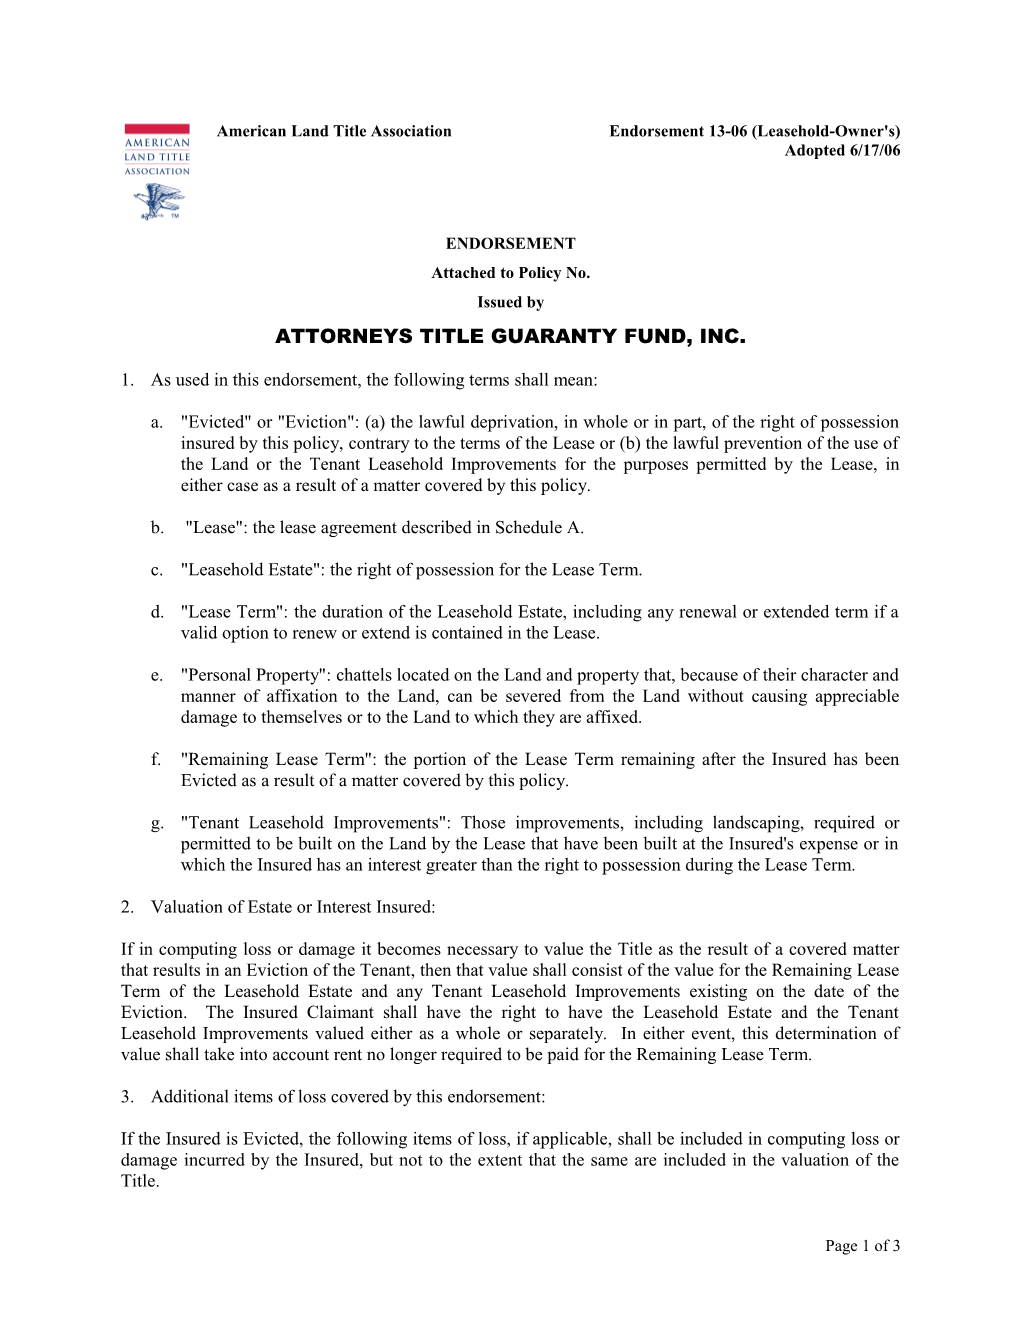 Attorneys Title Guaranty Fund, Inc